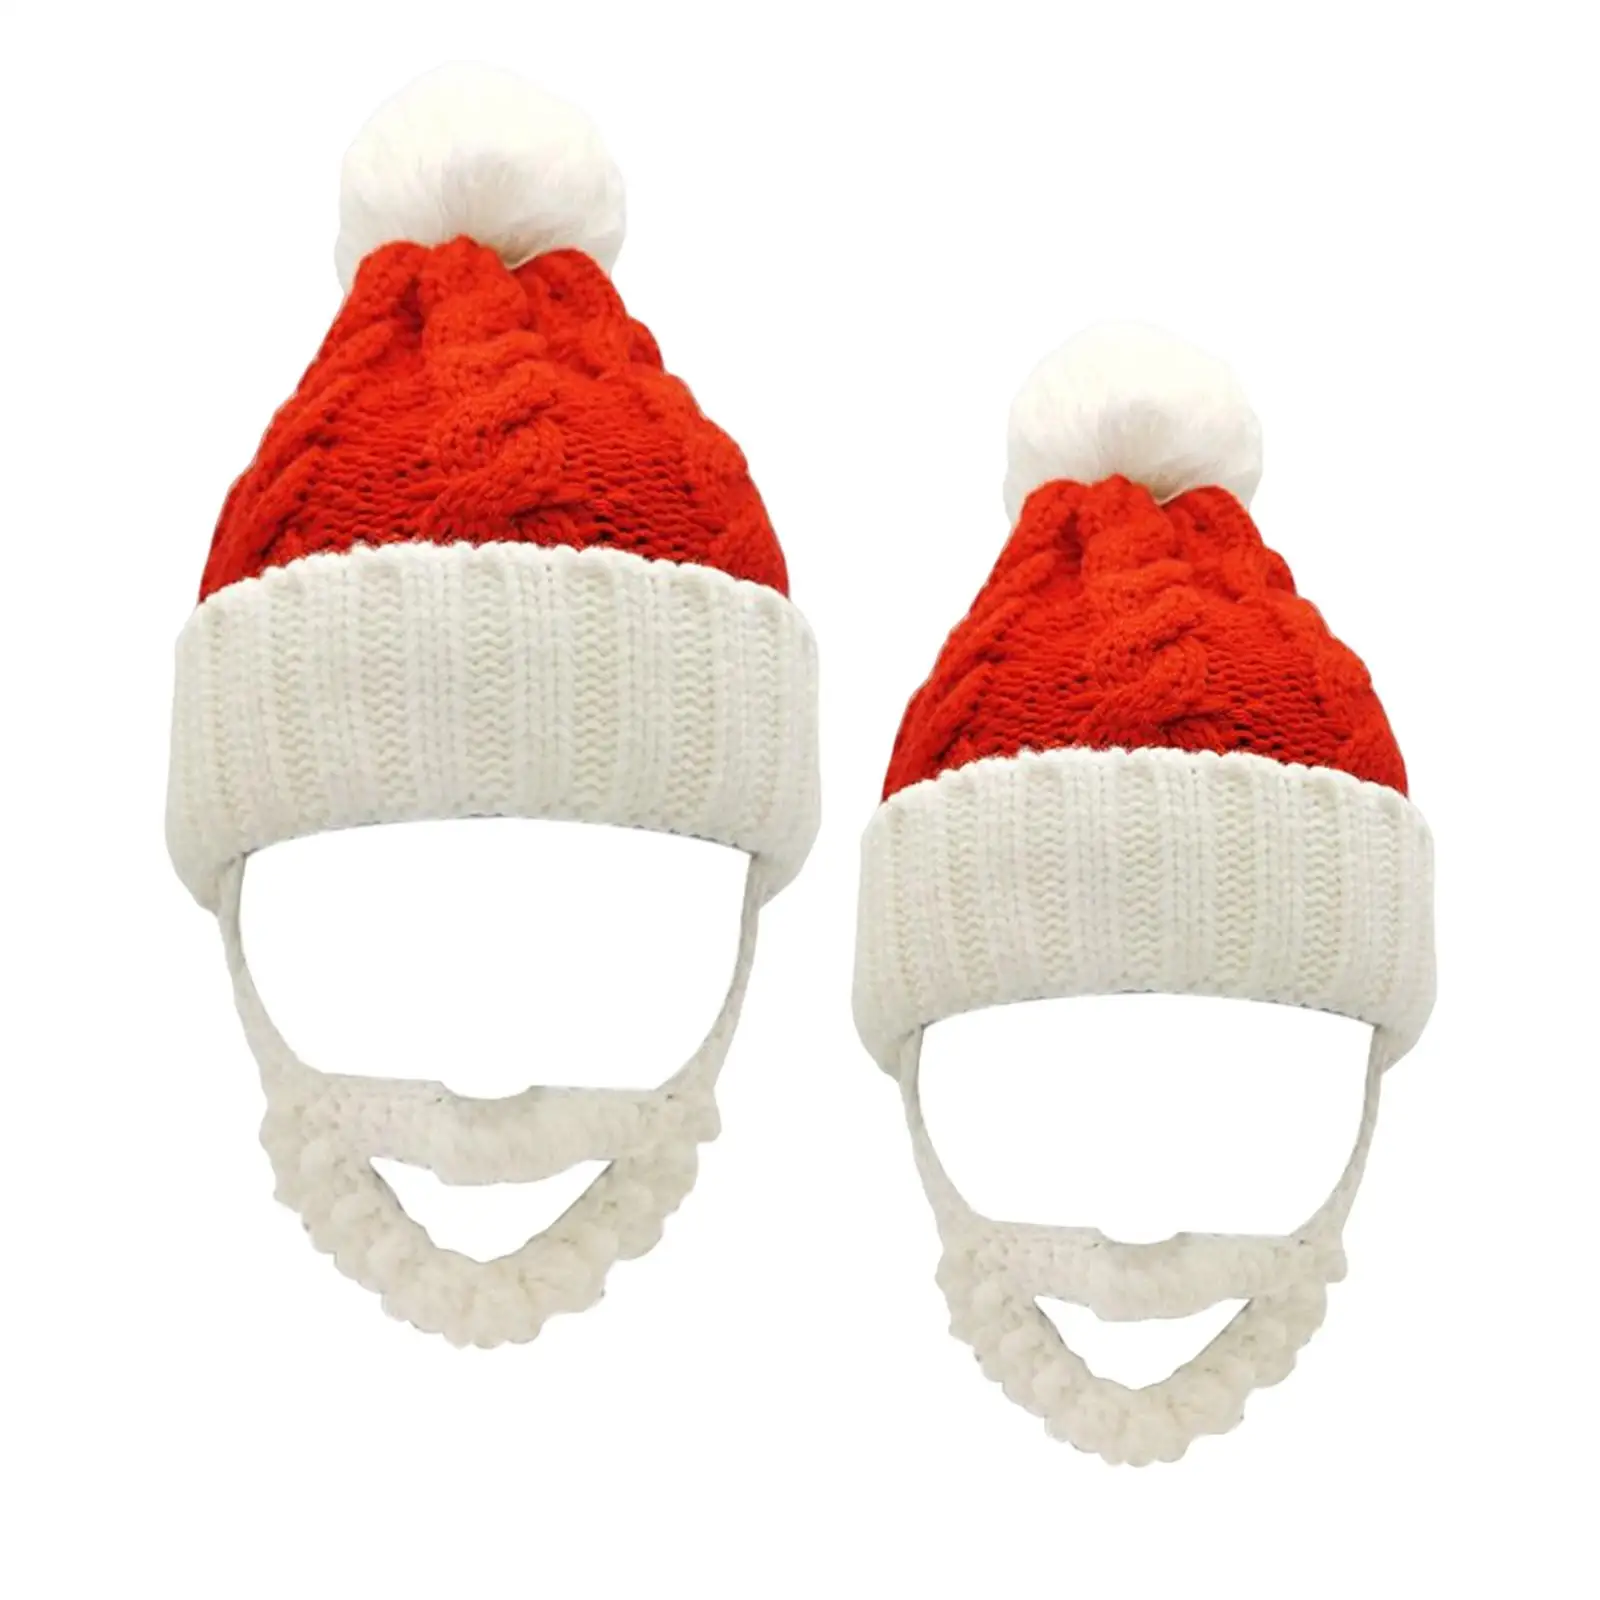 

Cute Winter Christmas Bearded Hat Knitted Crochet Warm Xmas Santa Claus Hat with Beard Headwear for Adult Kid